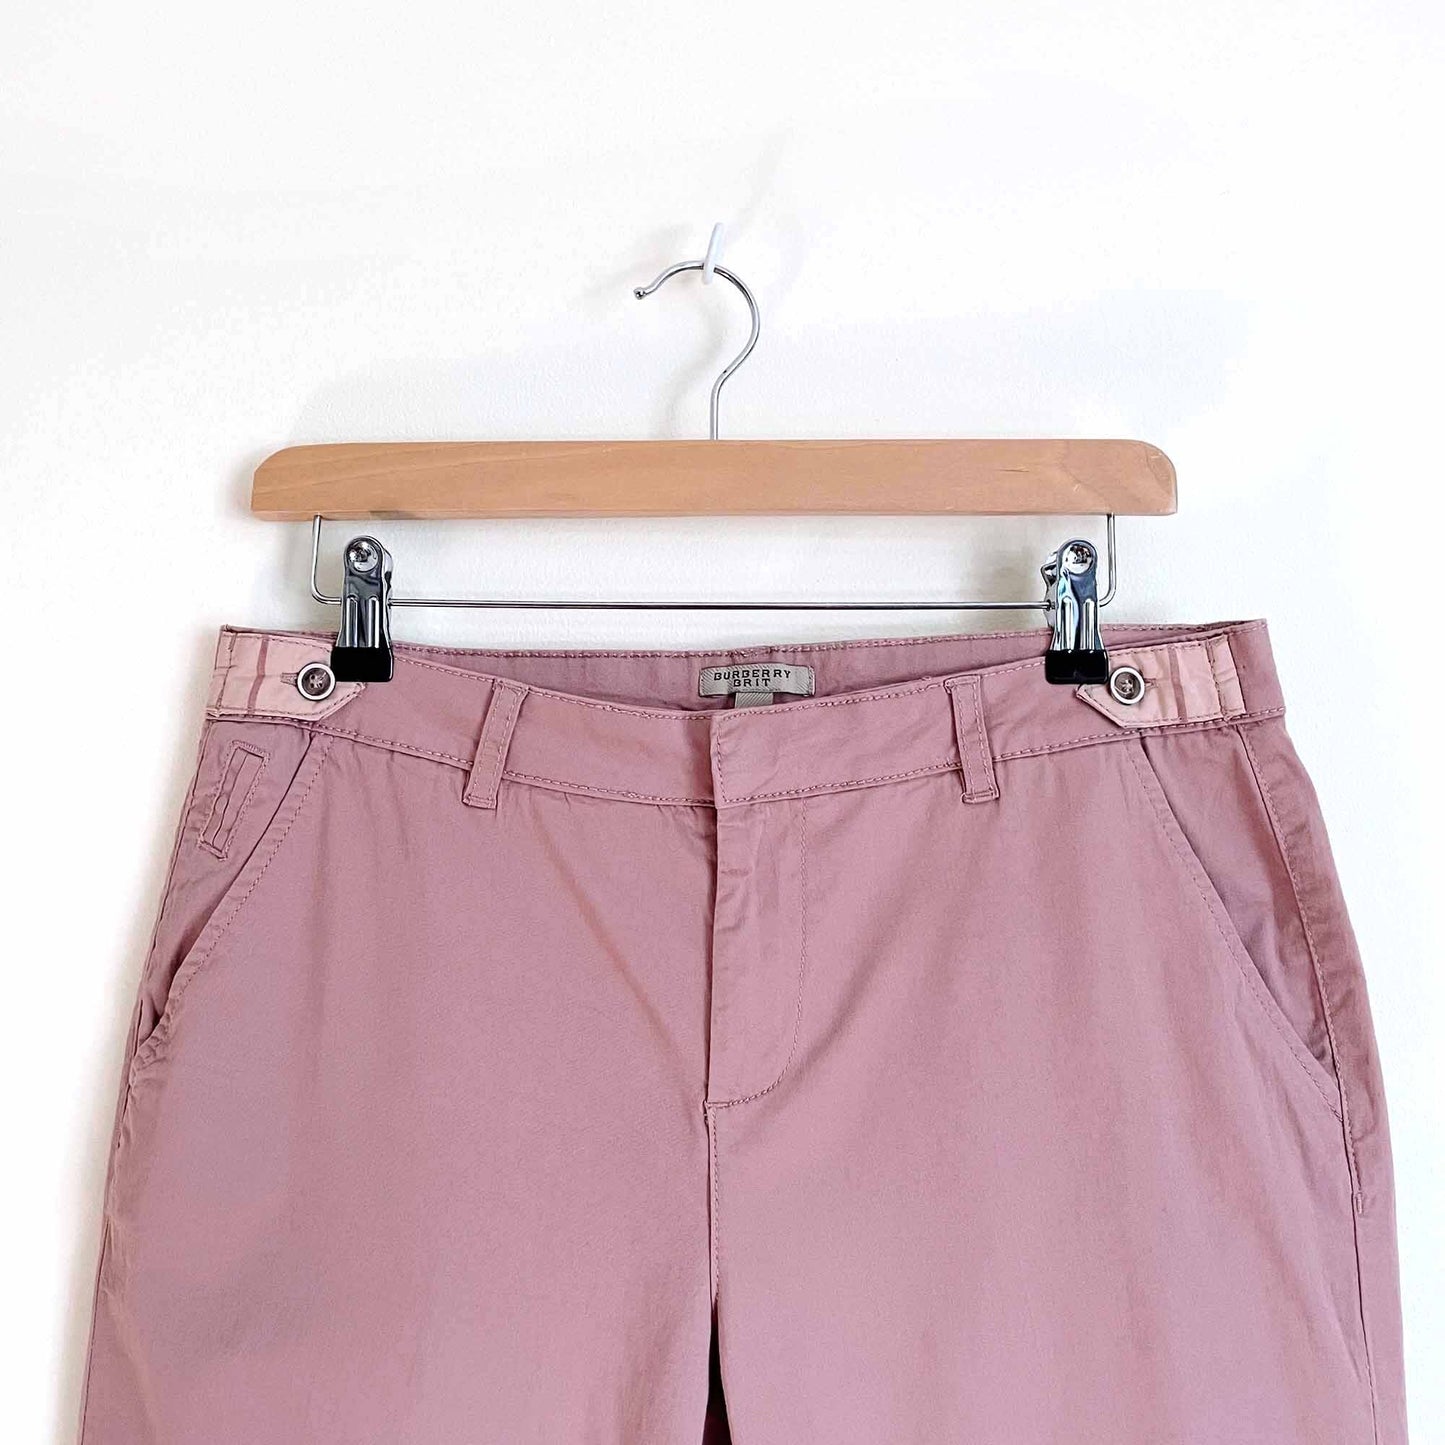 burberry brit pink slim fit chino trouser - size medium